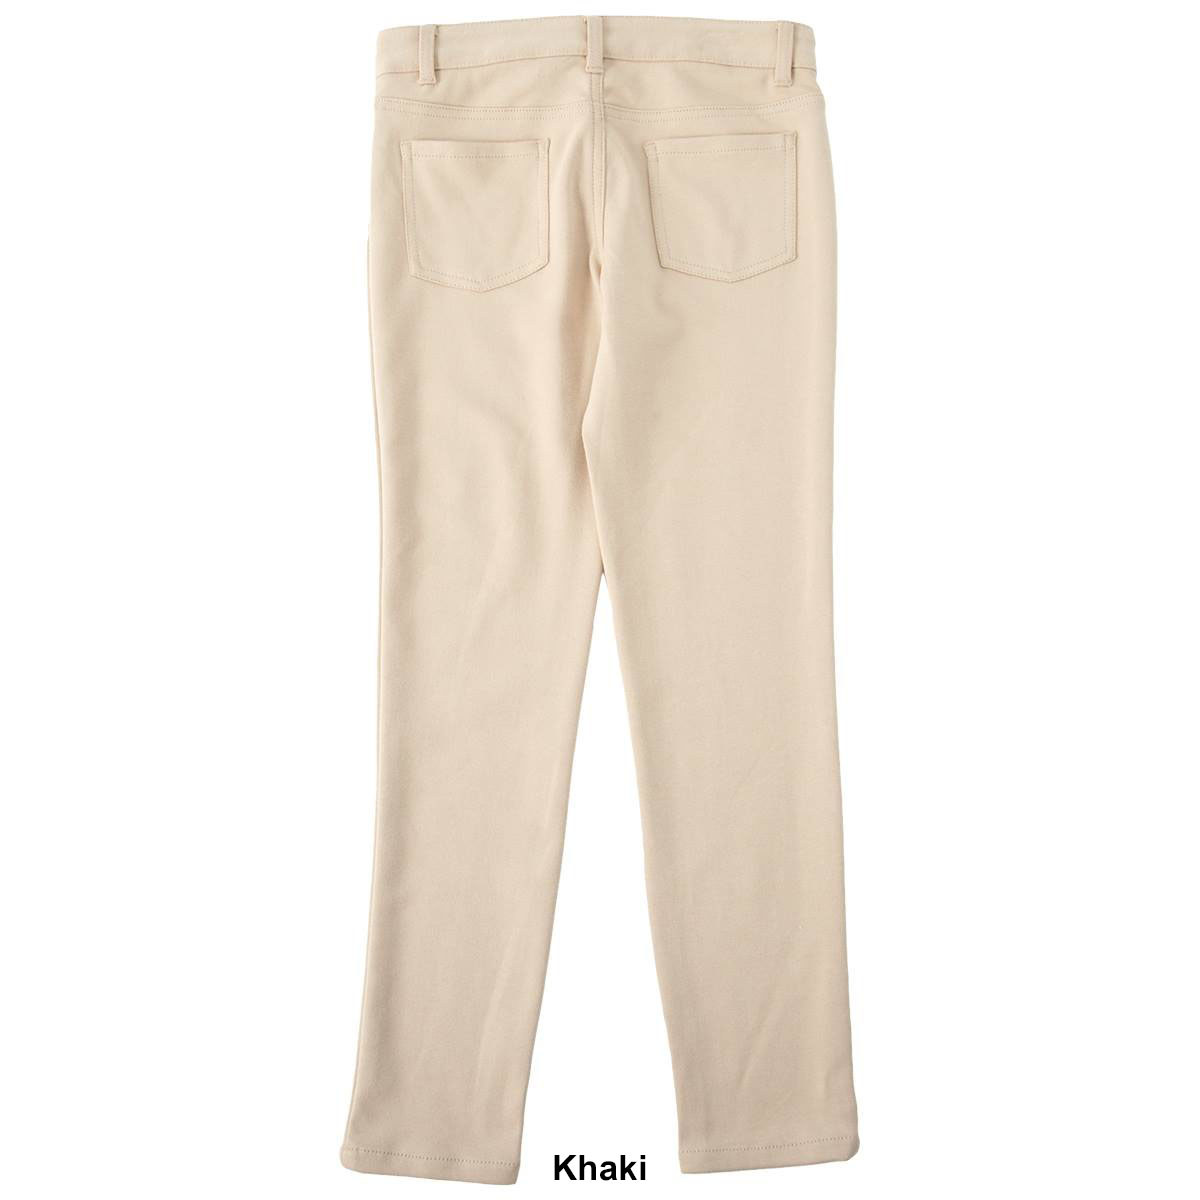 Girls (7-16) School Uniform Skinny 5 Pocket Knit Pants